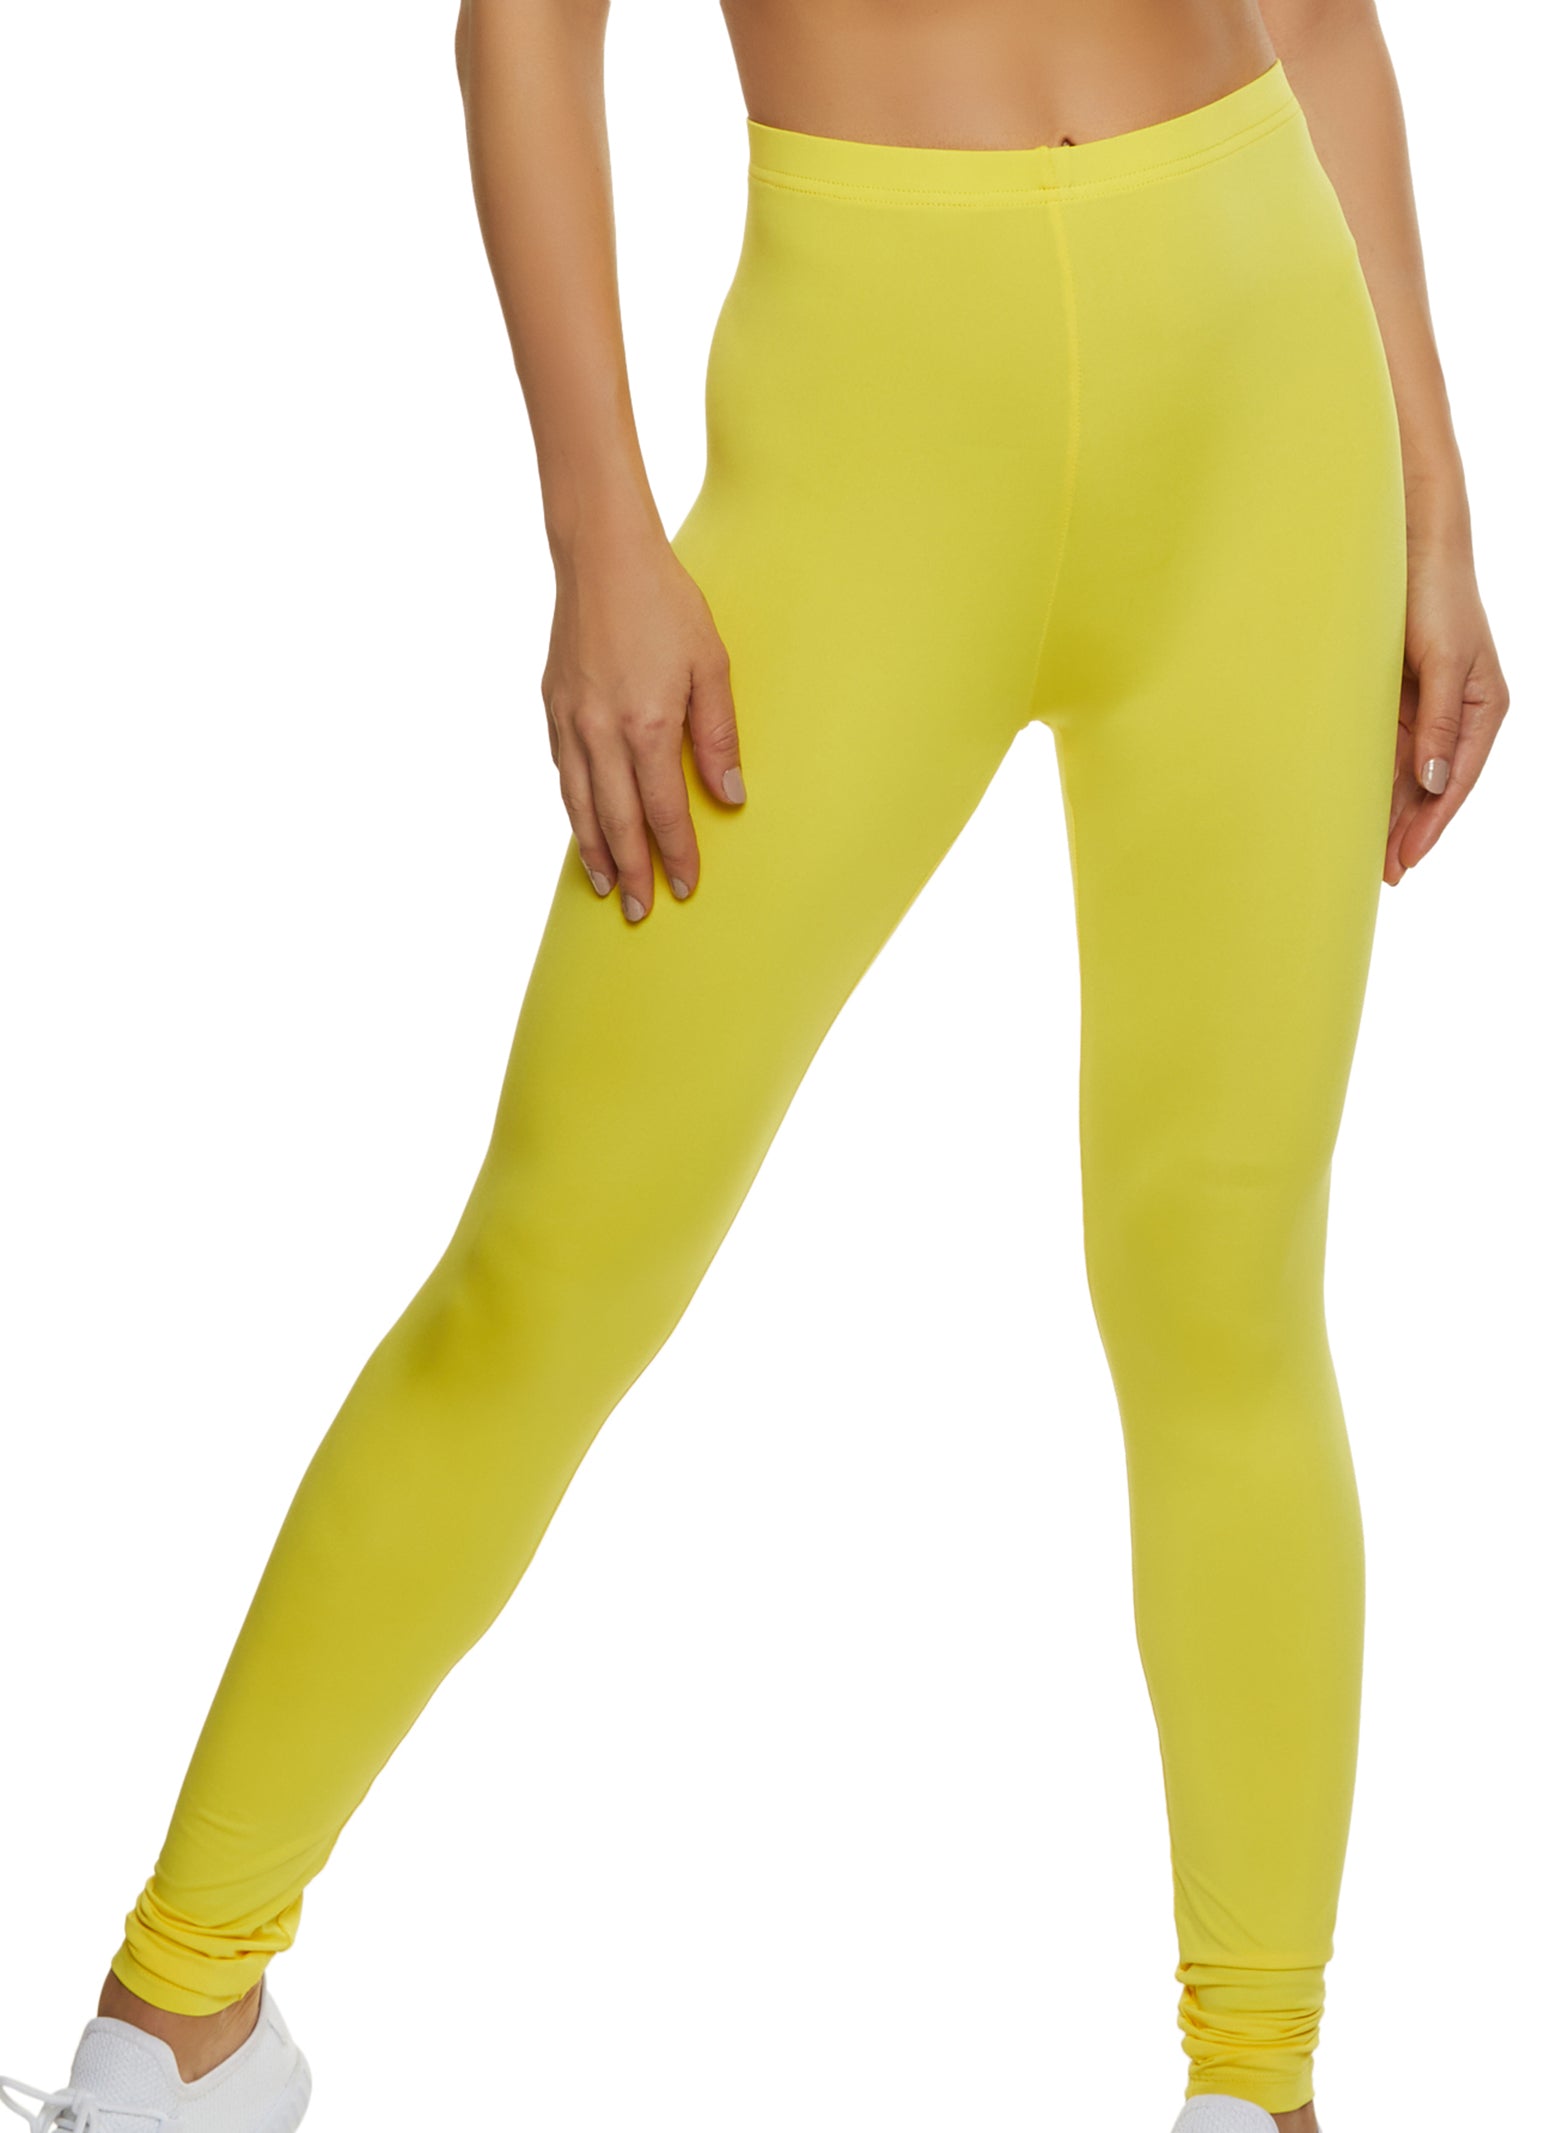 Solid Color Lycra Leggings in Light Yellow : BNJ820